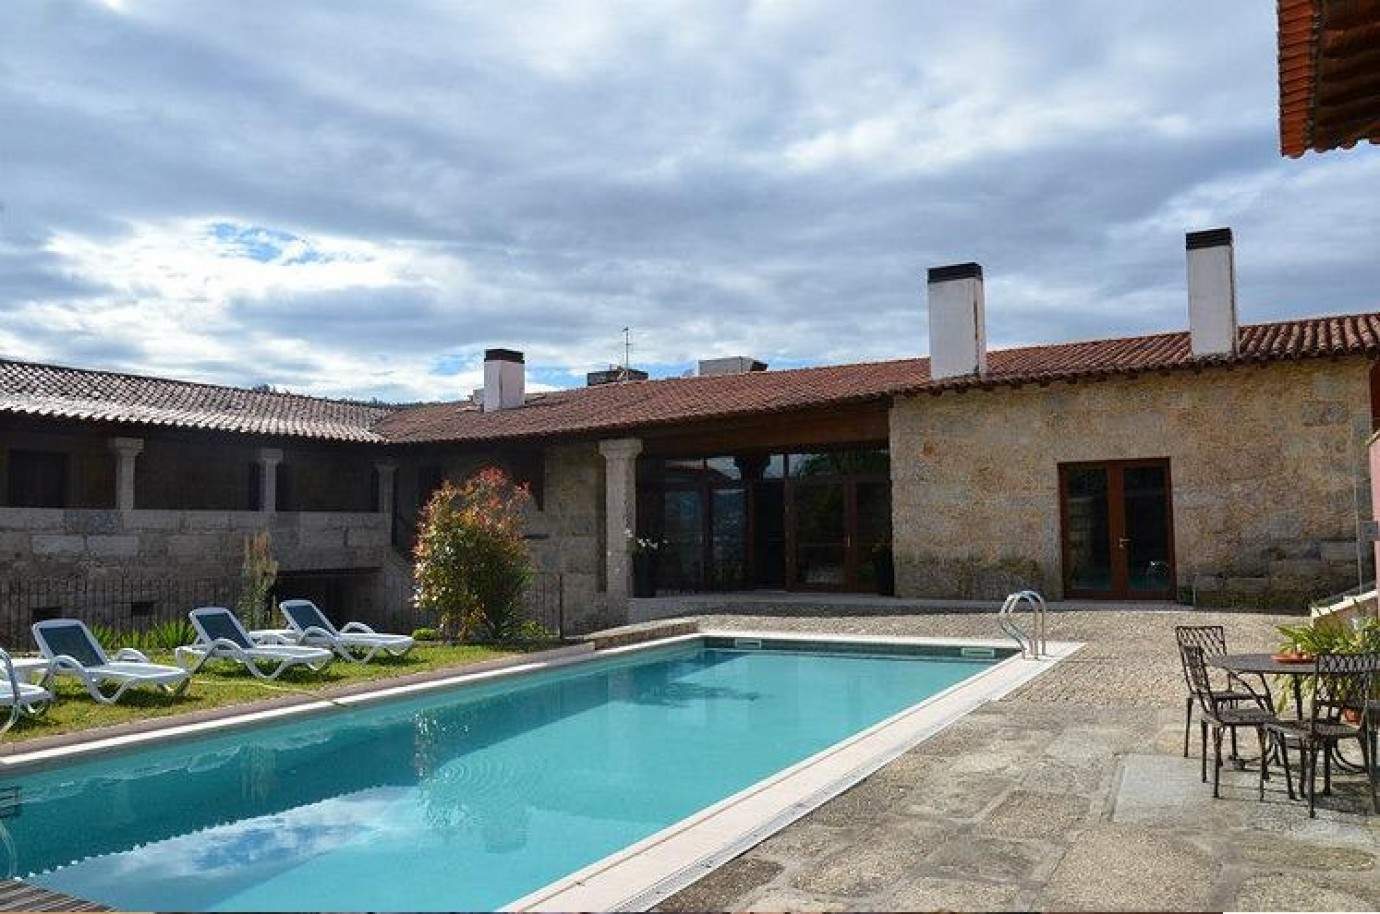 Hotel rural com piscina e jardim, S. Vicente Penso, Braga_35974